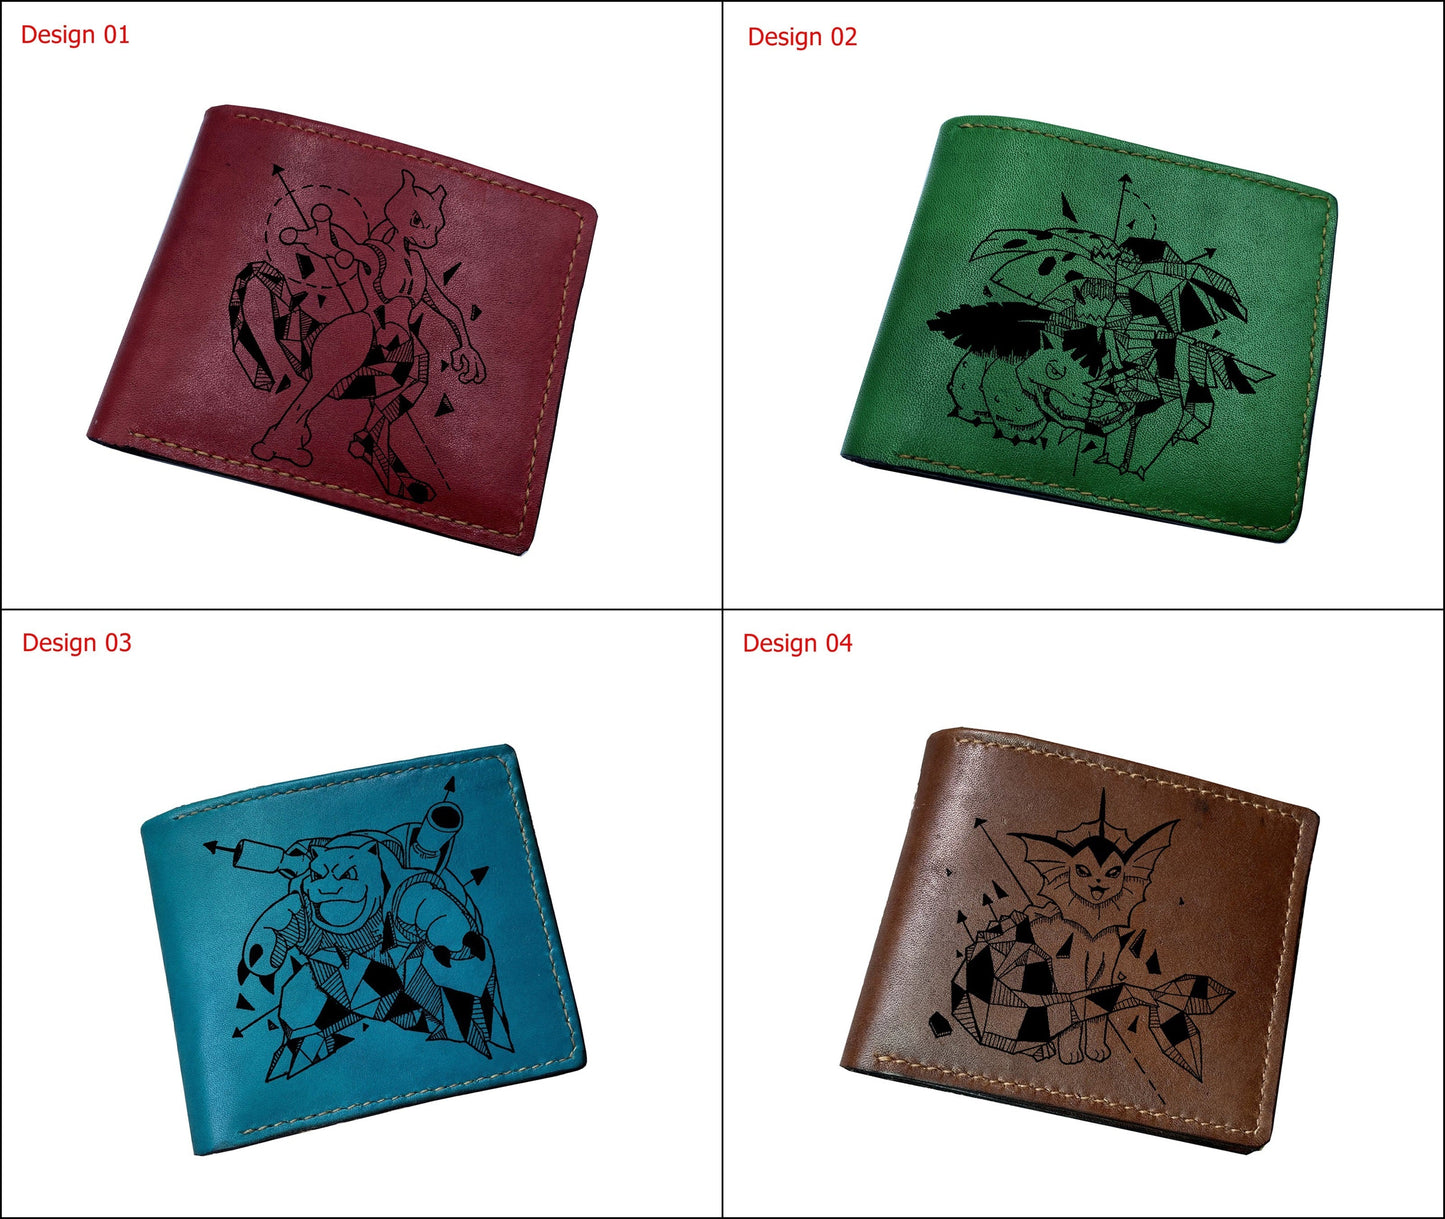 Mayan Corner - Pokemon geometric art leather handmade wallet, leather gift for dad, husband, brother - Dragonite evolution